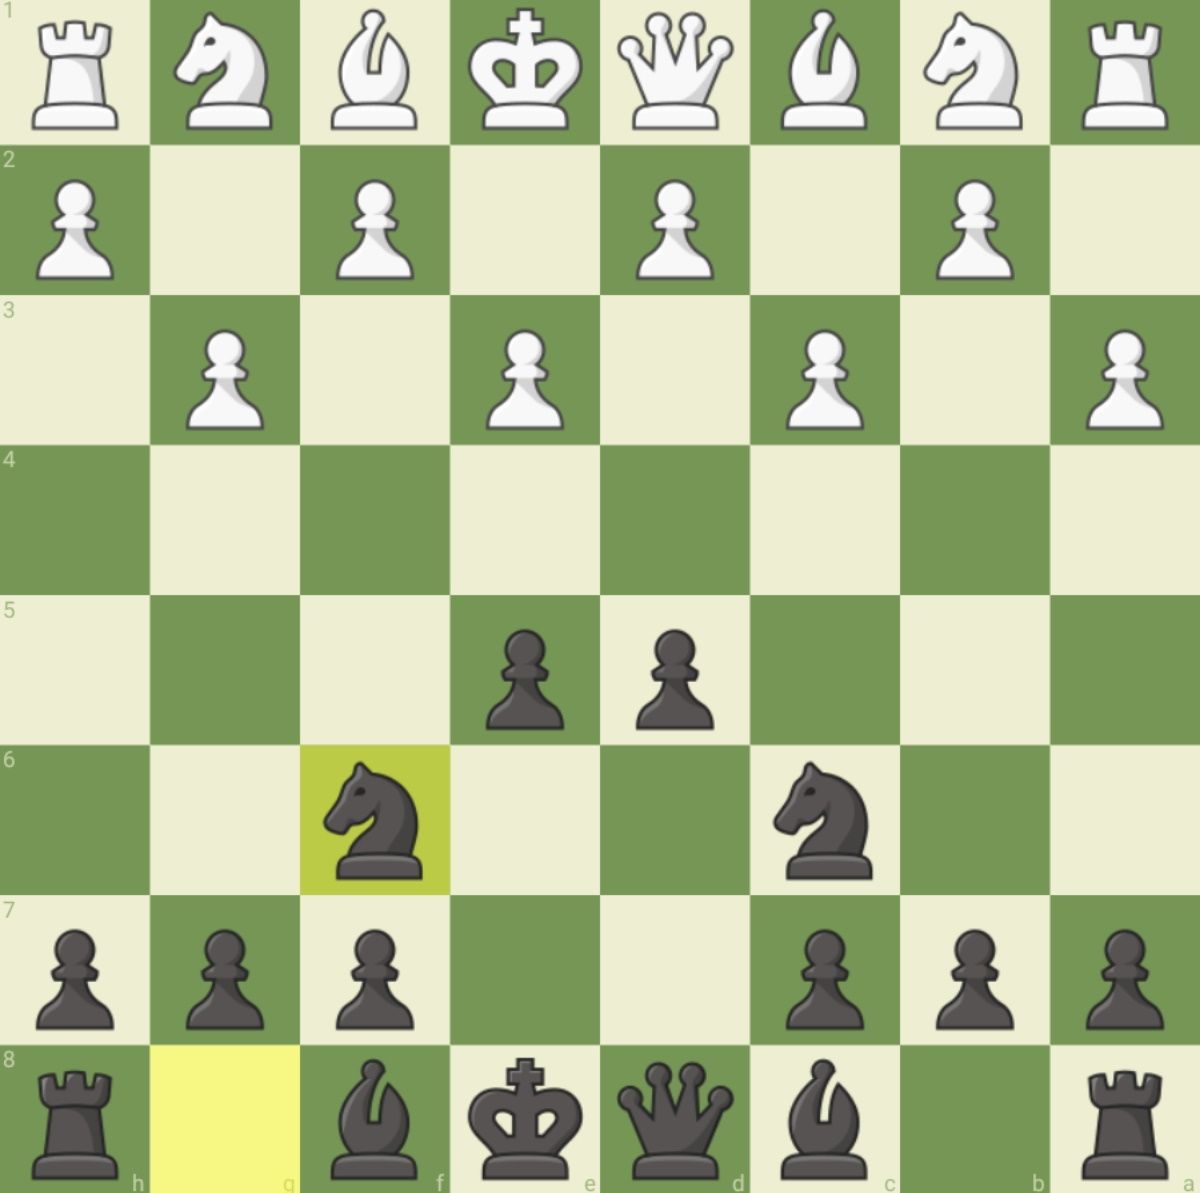 Is Chess Fun, Frustrating, or Futile?